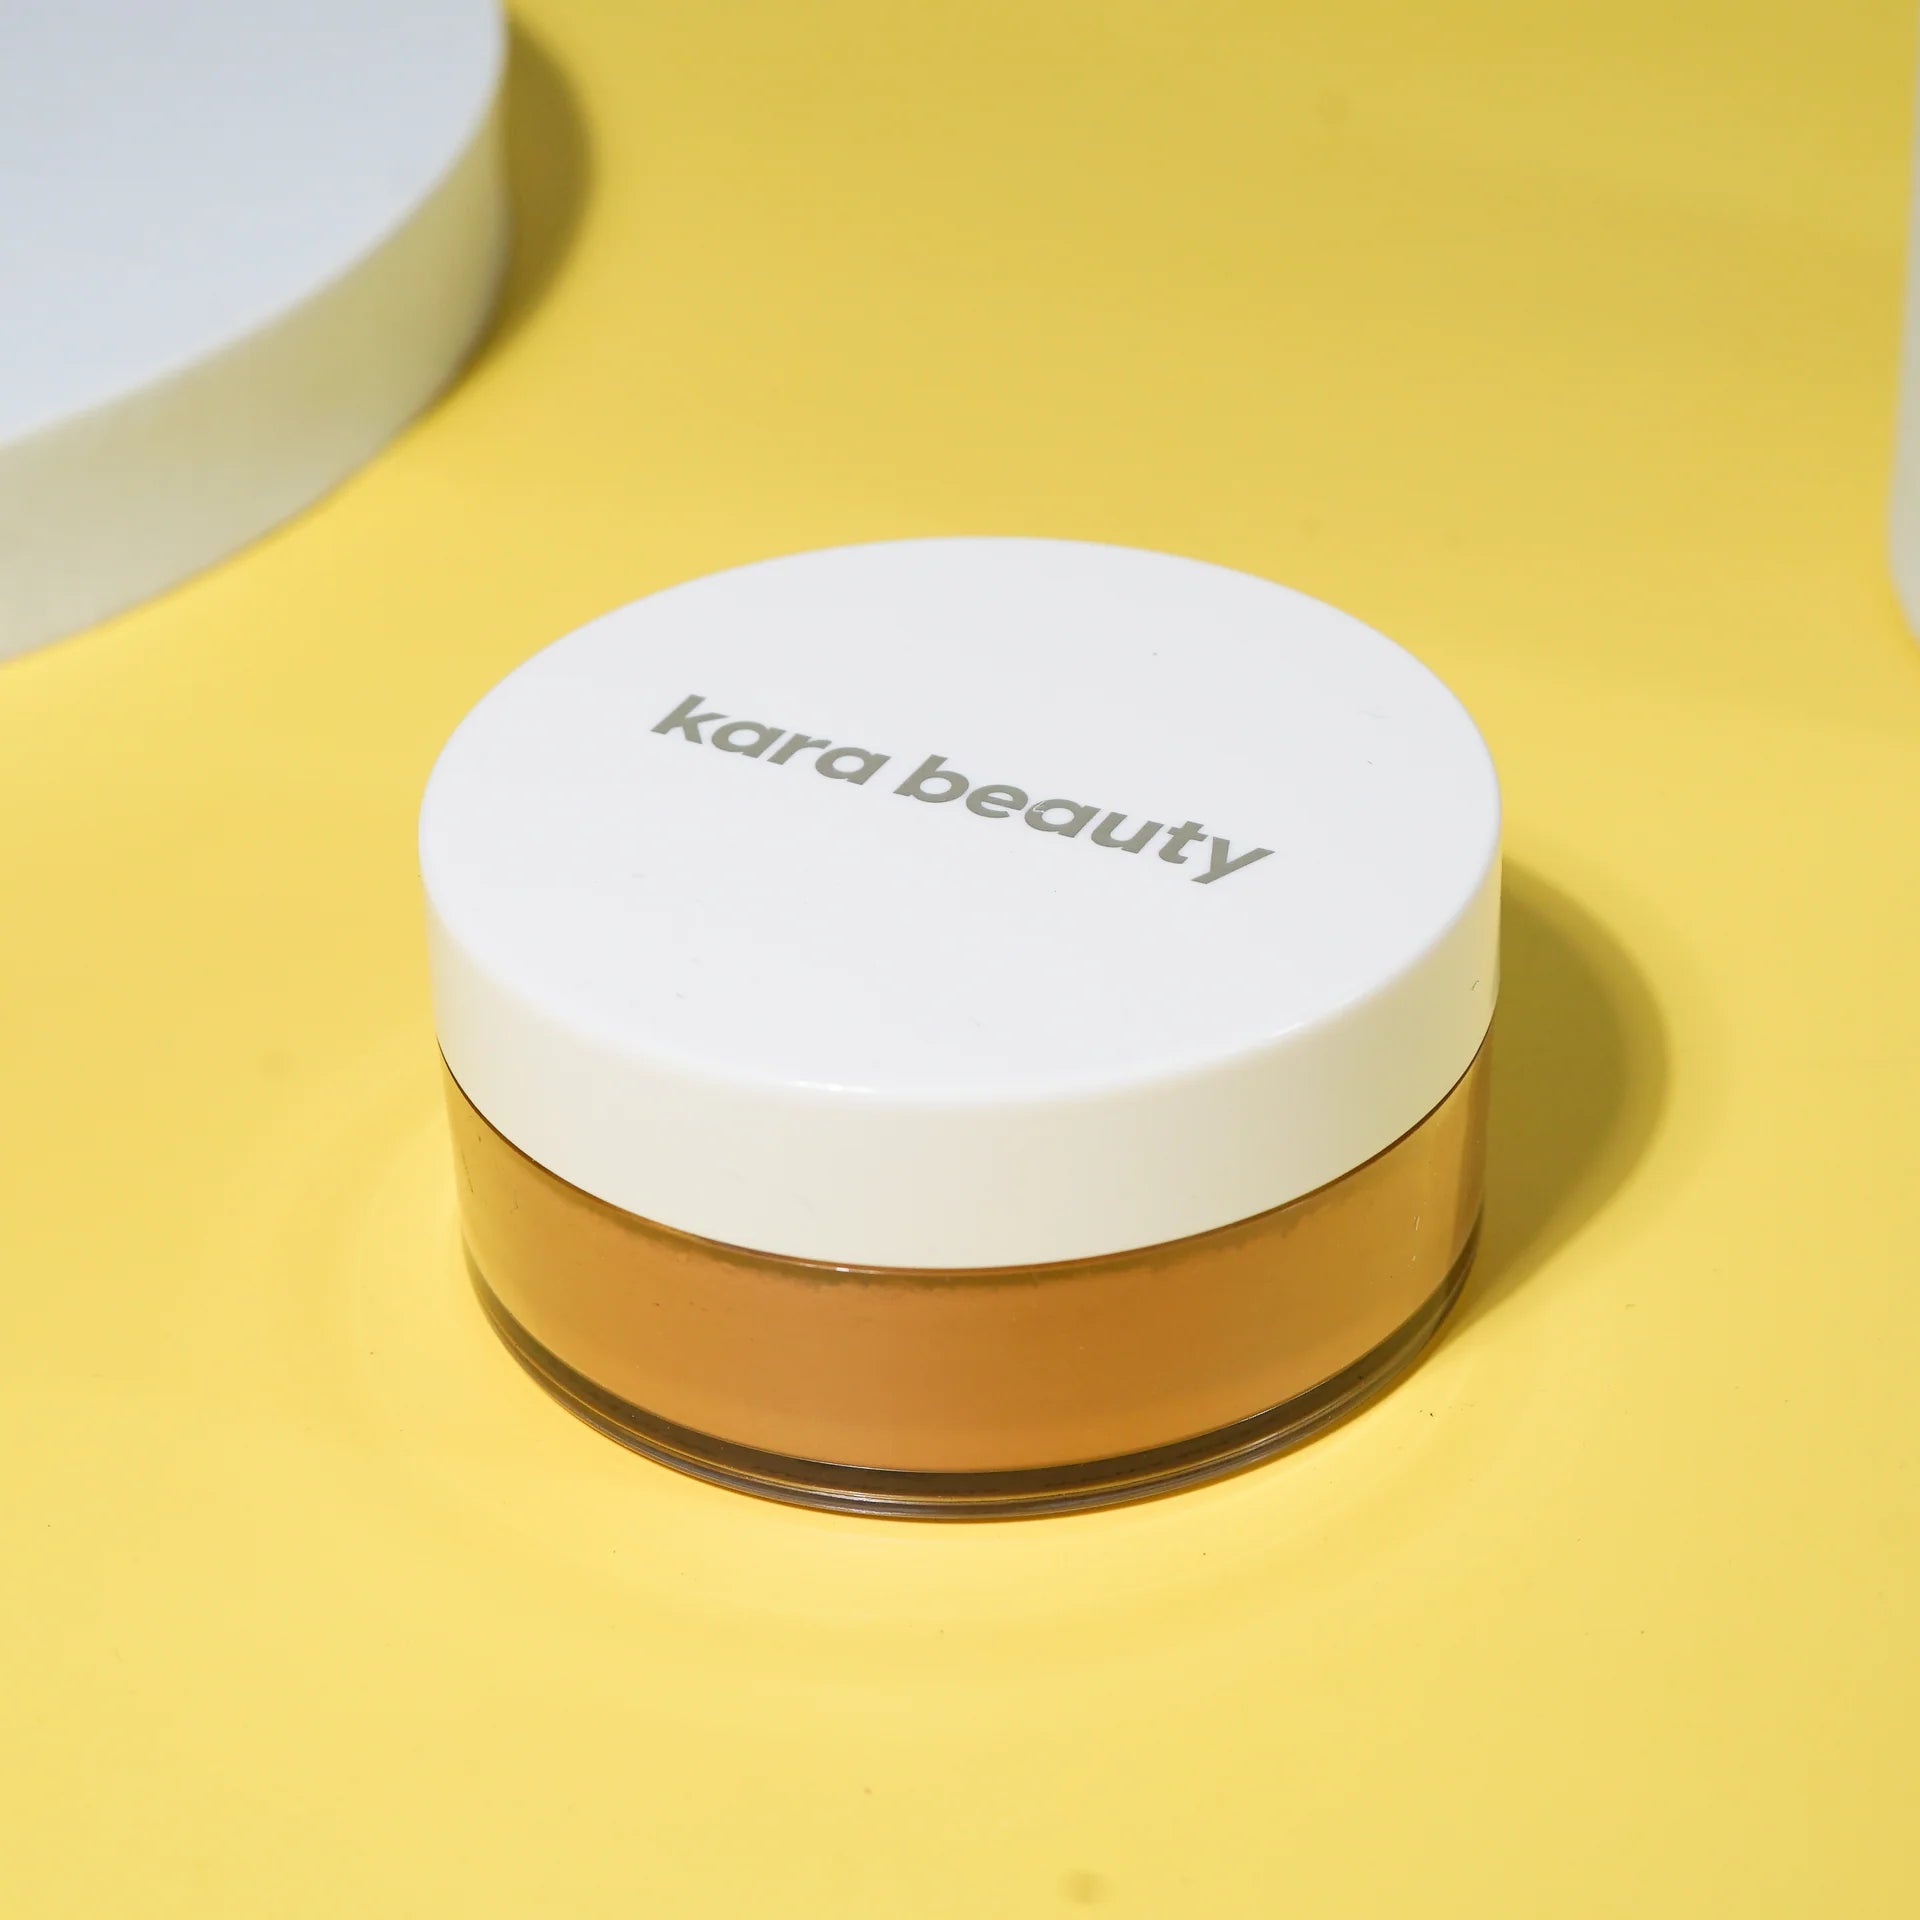 Kara Beauty - Essentials Setting Powder - Translucent Deep